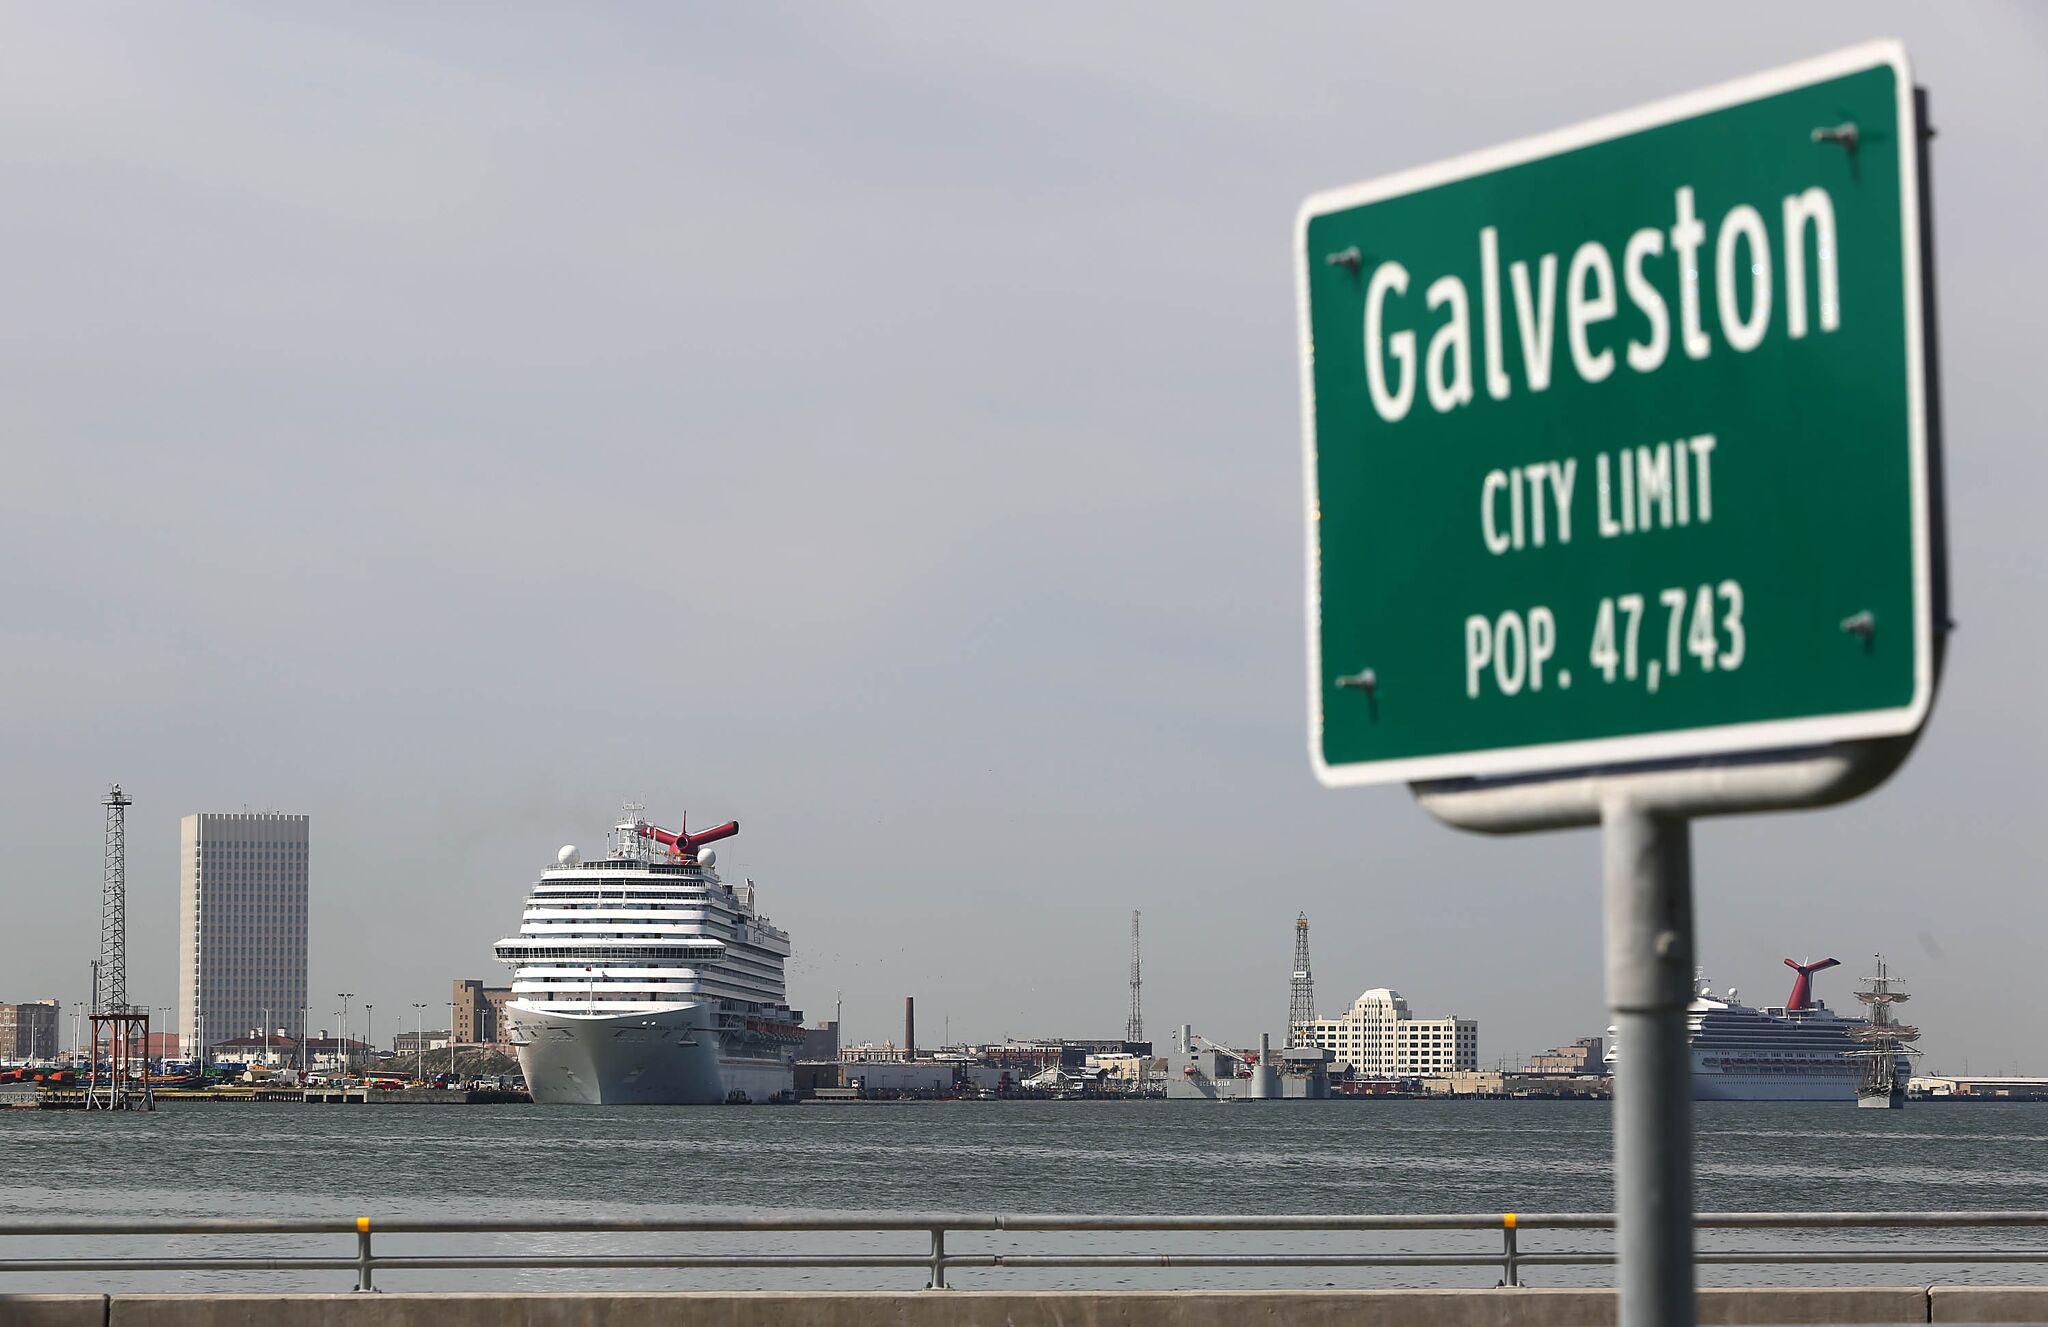 hundreds sickened aboard galveston cruise ship